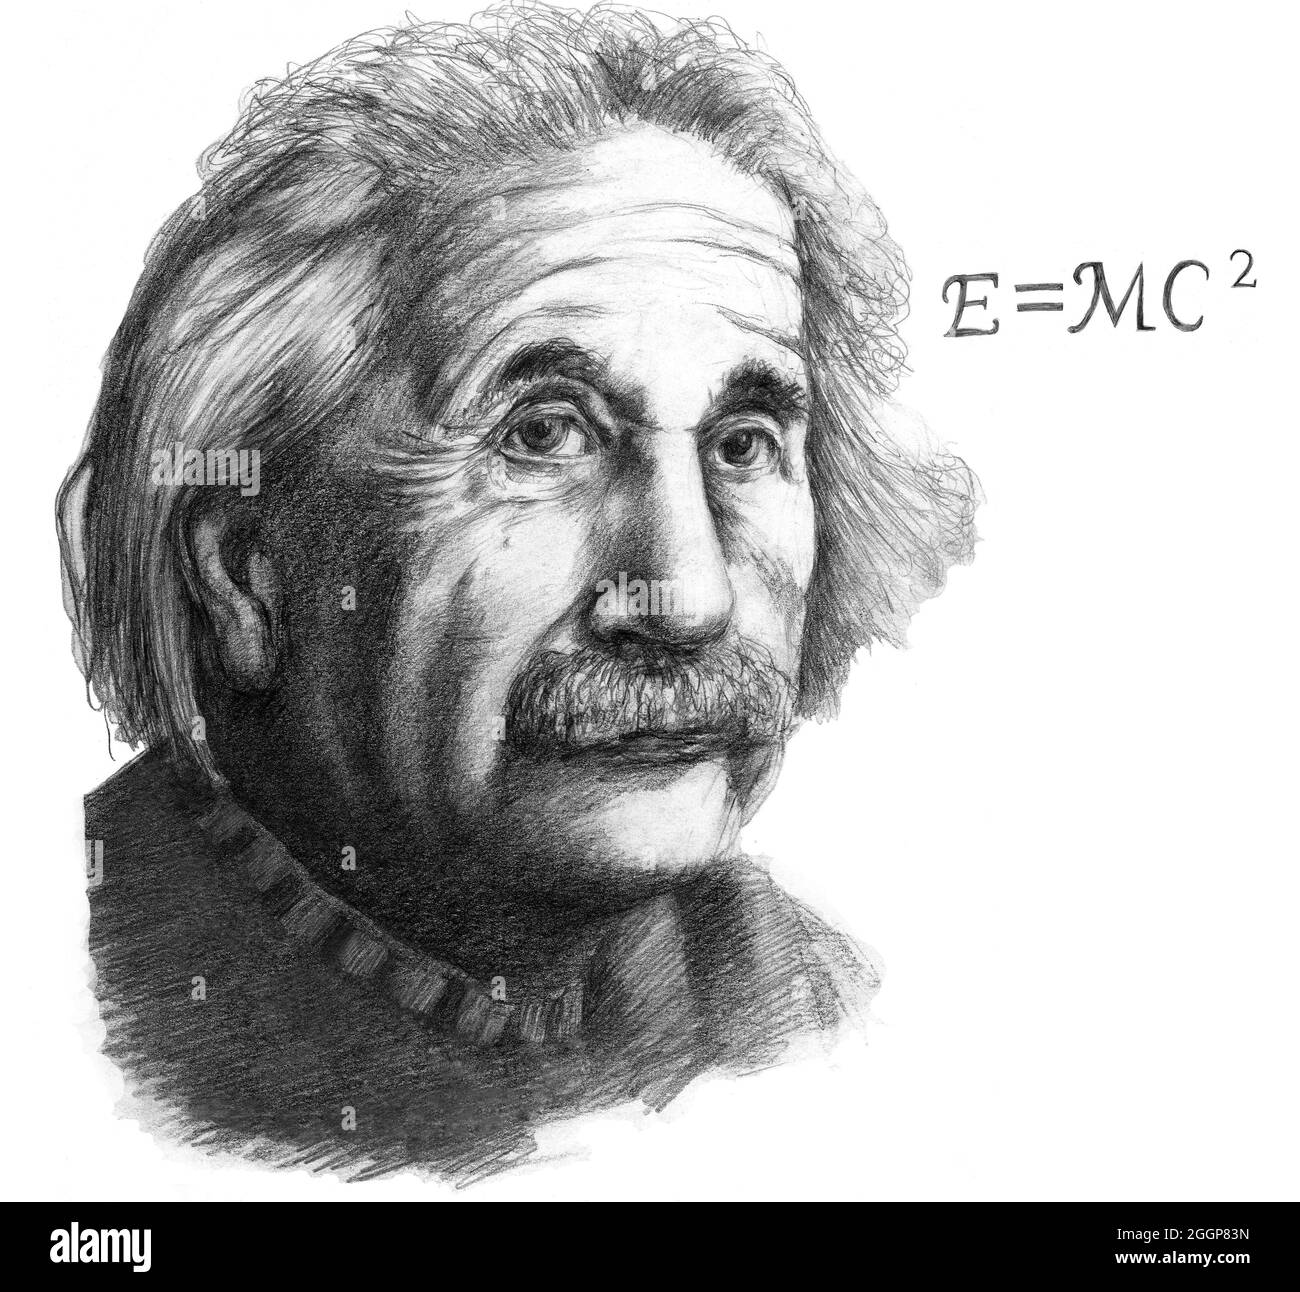 Albert Einstein (March 14, 1879 - April 18, 1955) was a German-born theoretical physicist. Stock Photo